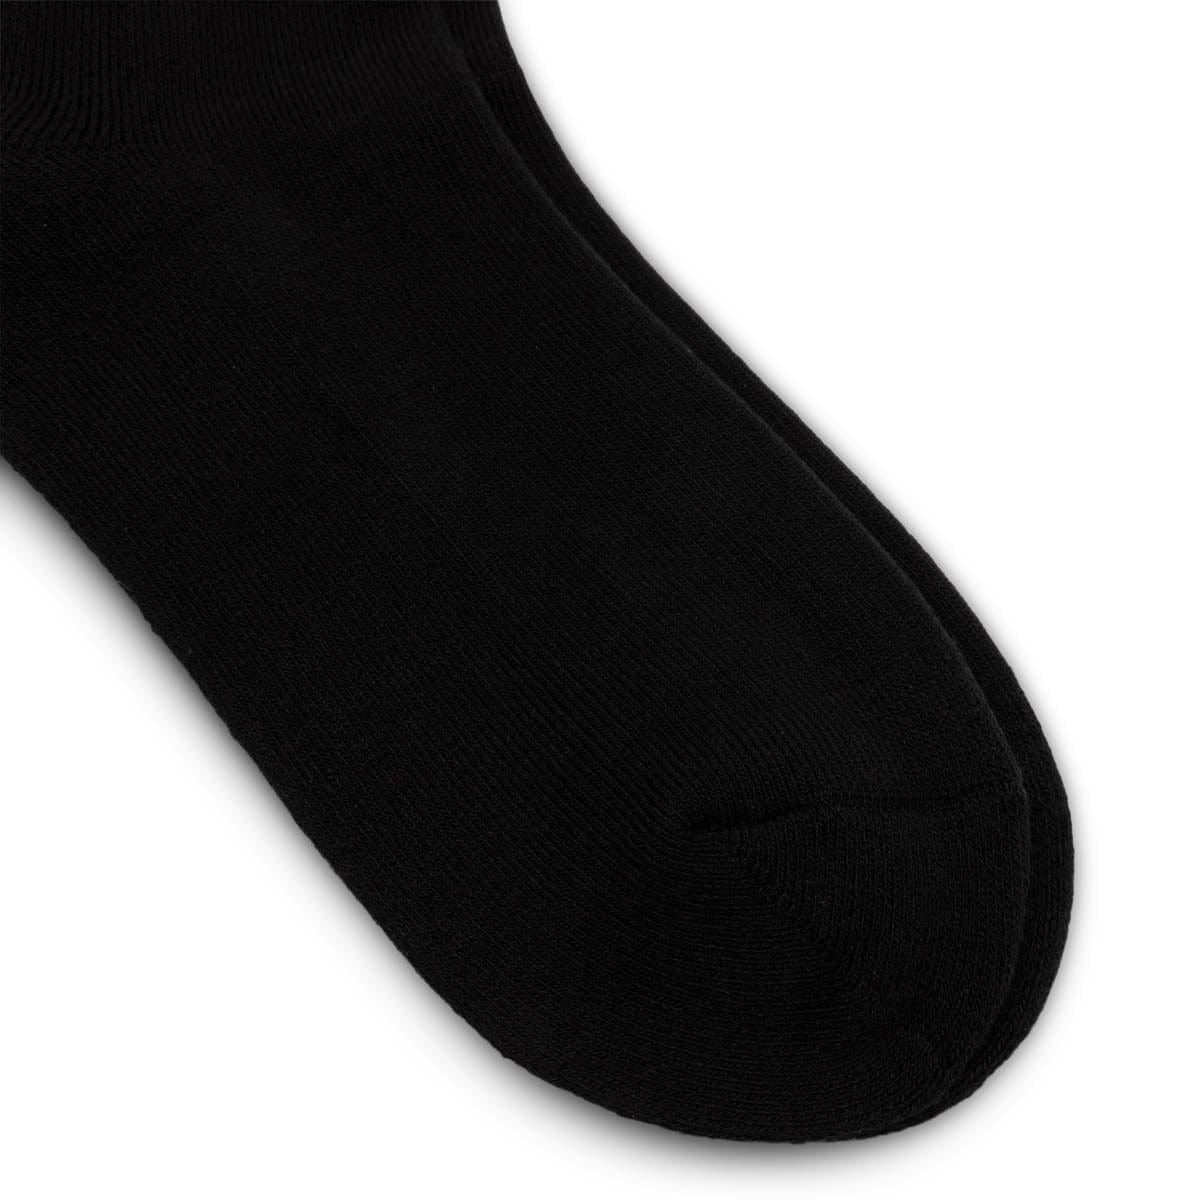 Neighborhood Socks BLACK / O/S NH / CA-SOCKS